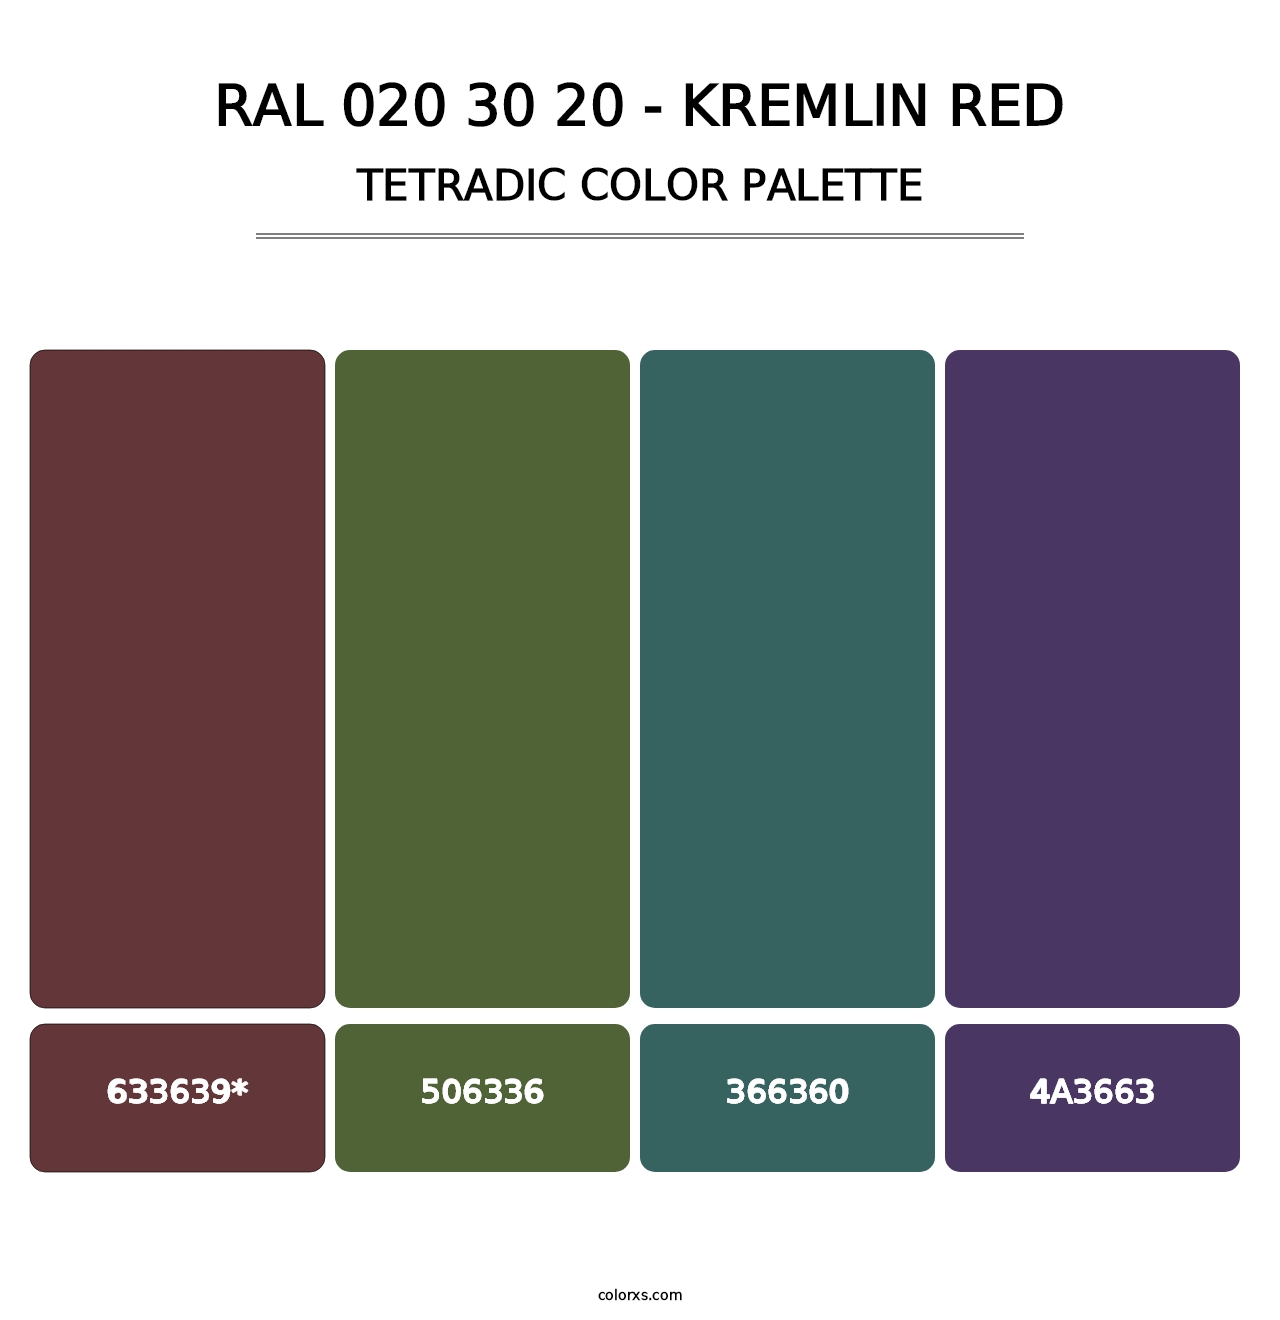 RAL 020 30 20 - Kremlin Red - Tetradic Color Palette